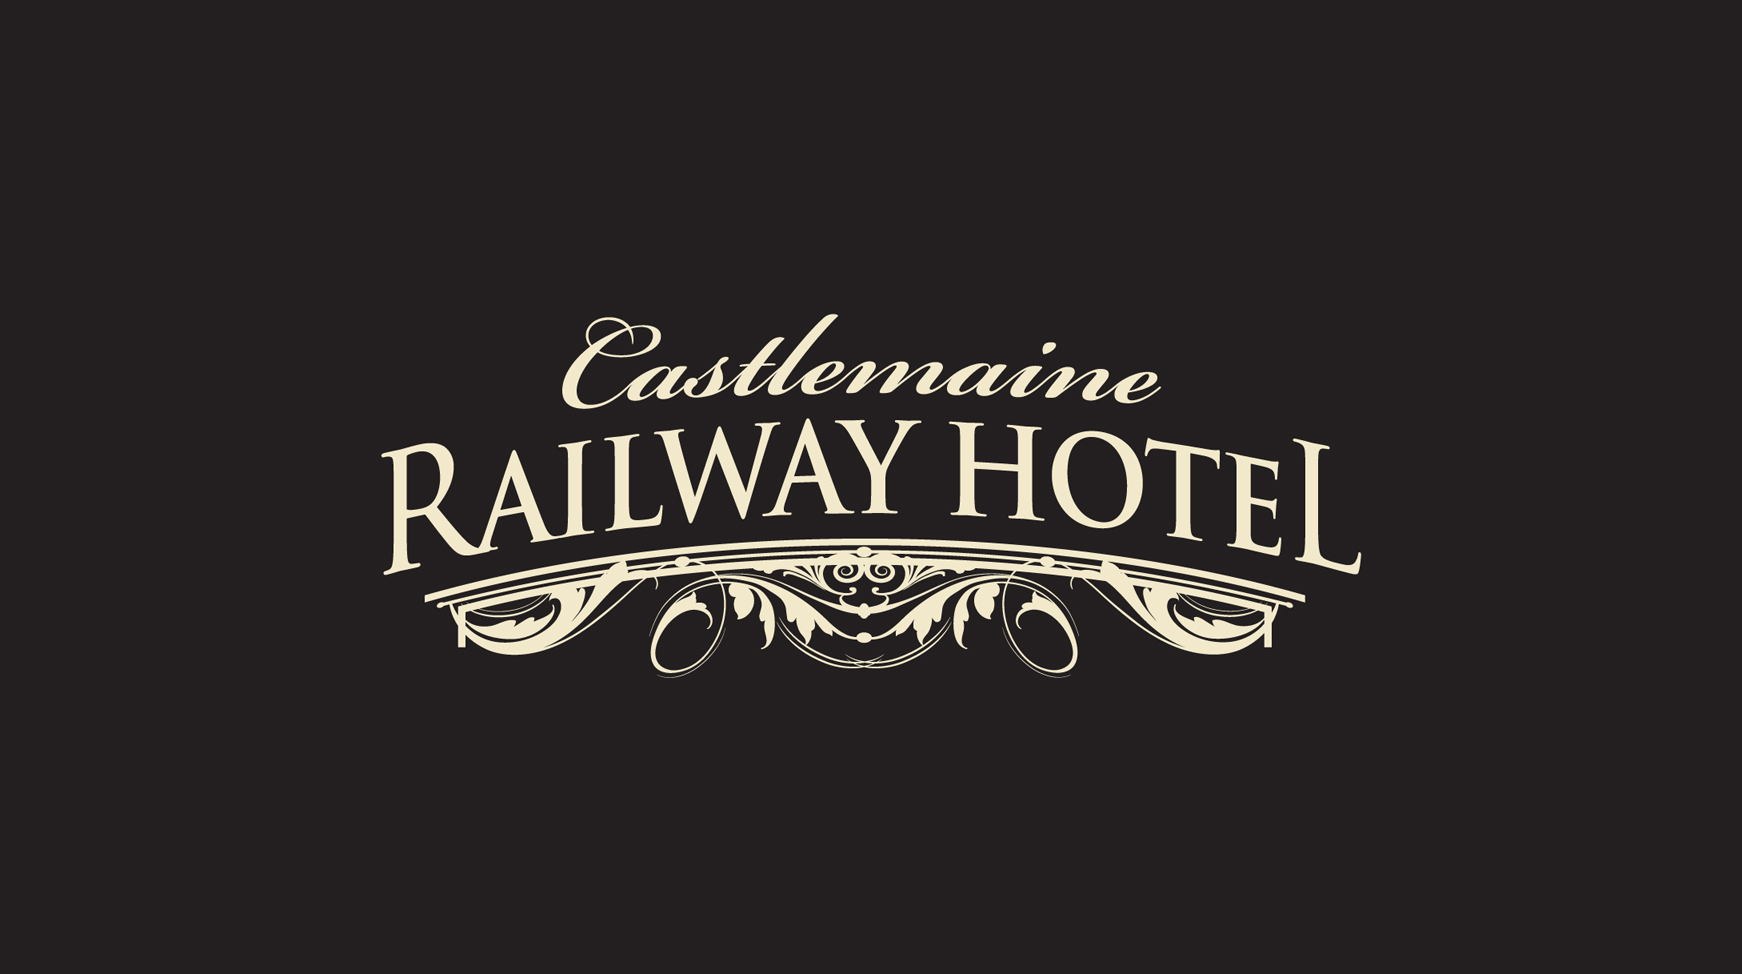 Railway Hotel Castlemaine - Carnarvon Accommodation